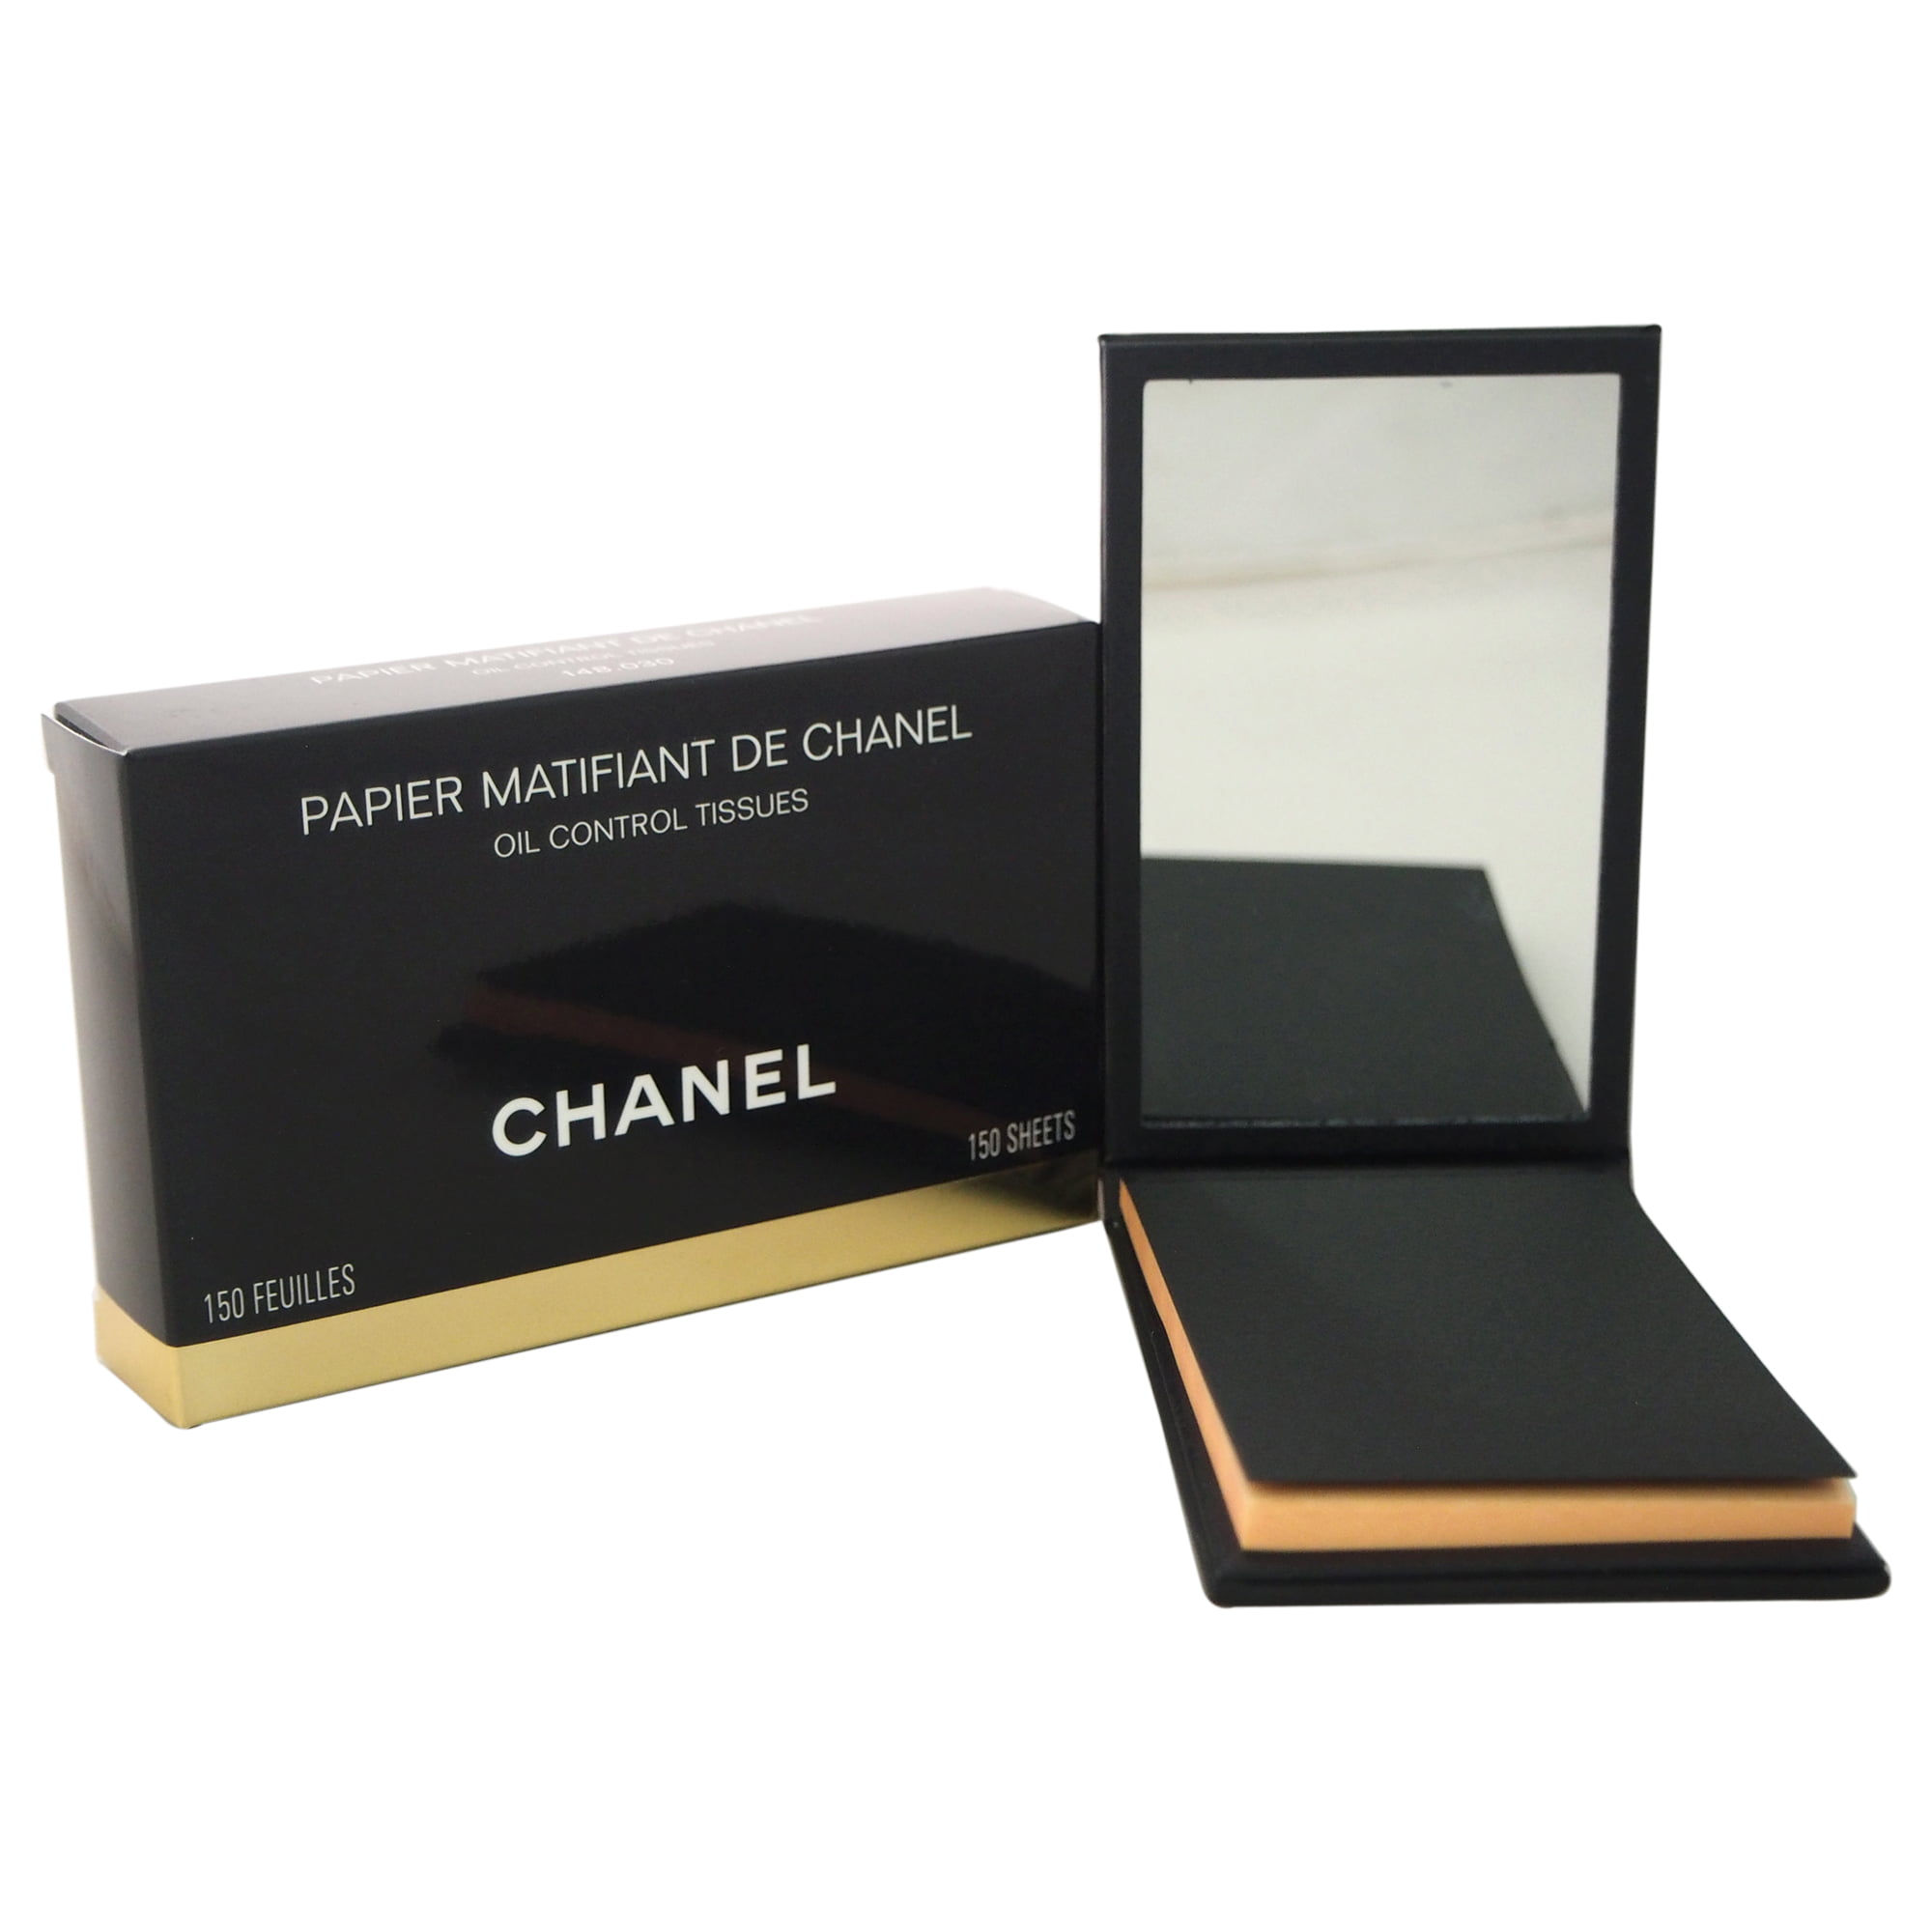 Papier Matifiant De Chanel Oil Control Tissues by Chanel for Women - 150 Pc  Tissues